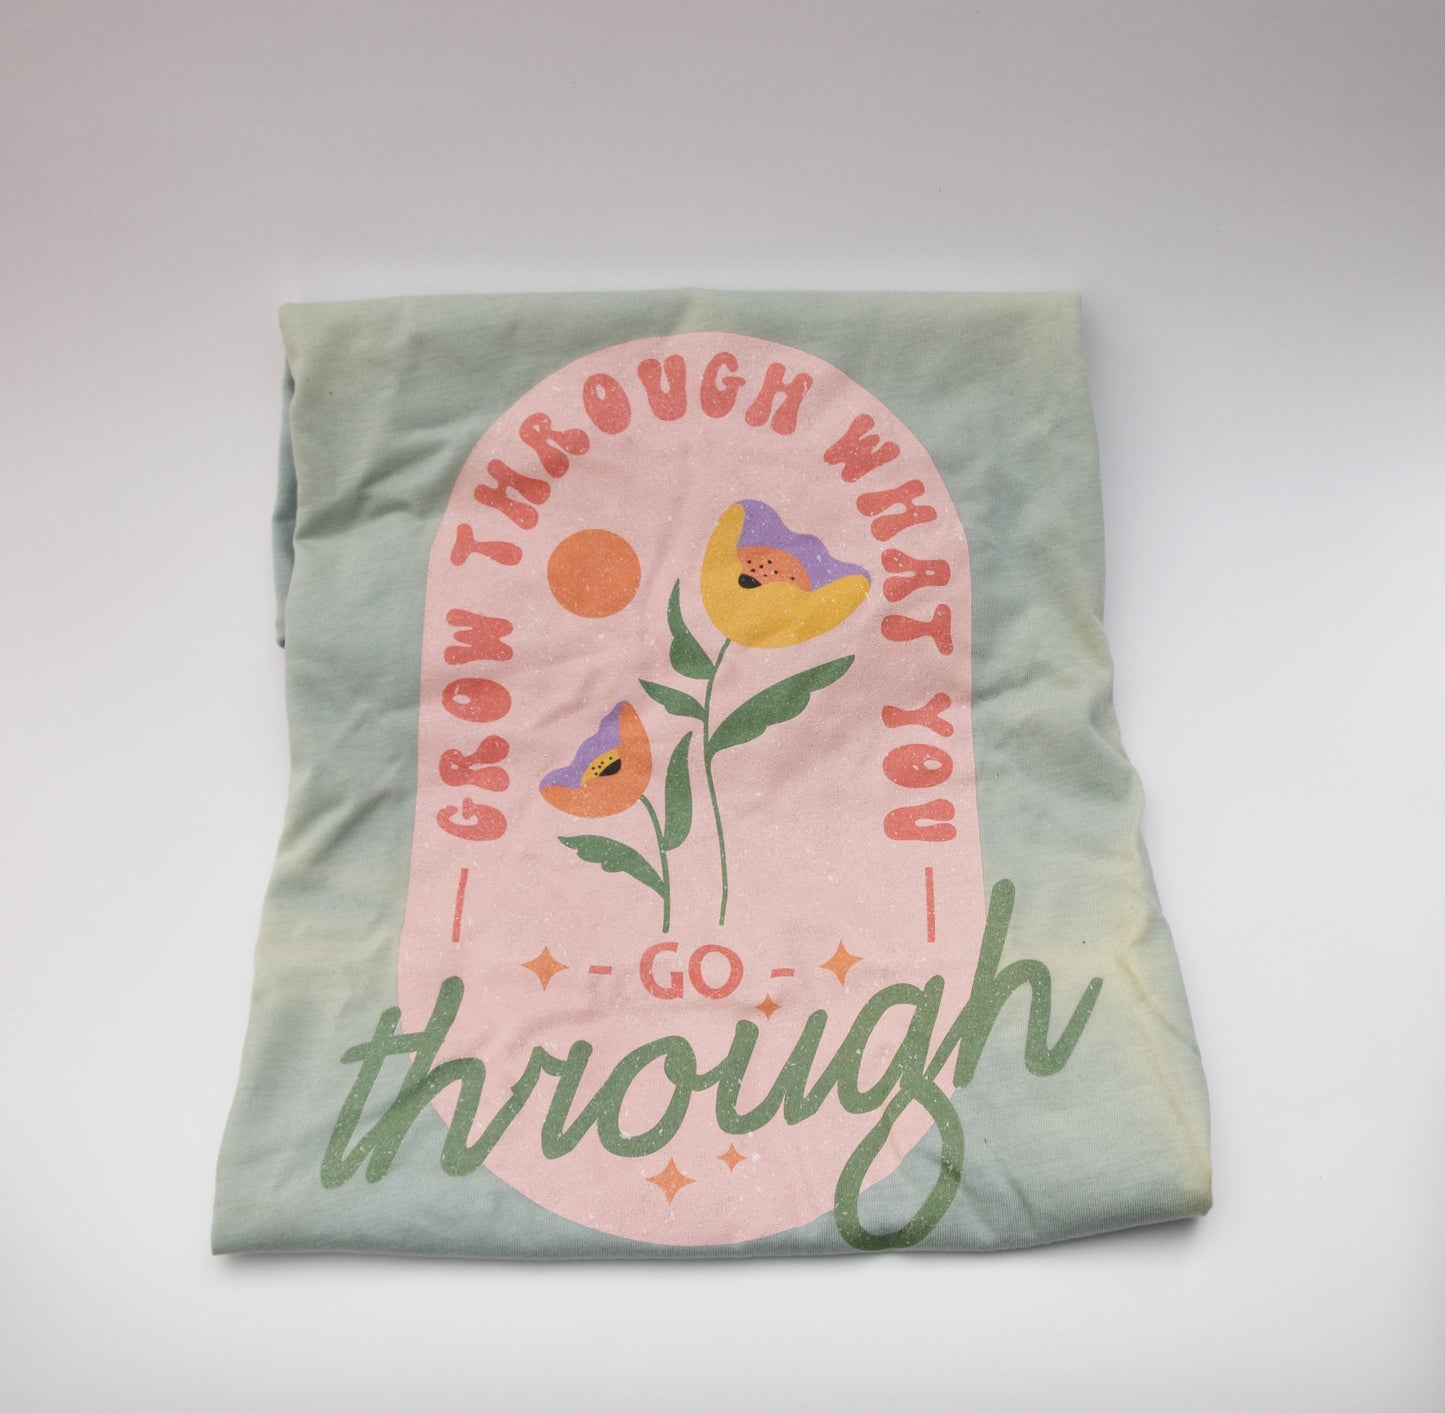 "Grow through what you go through" t-shirt